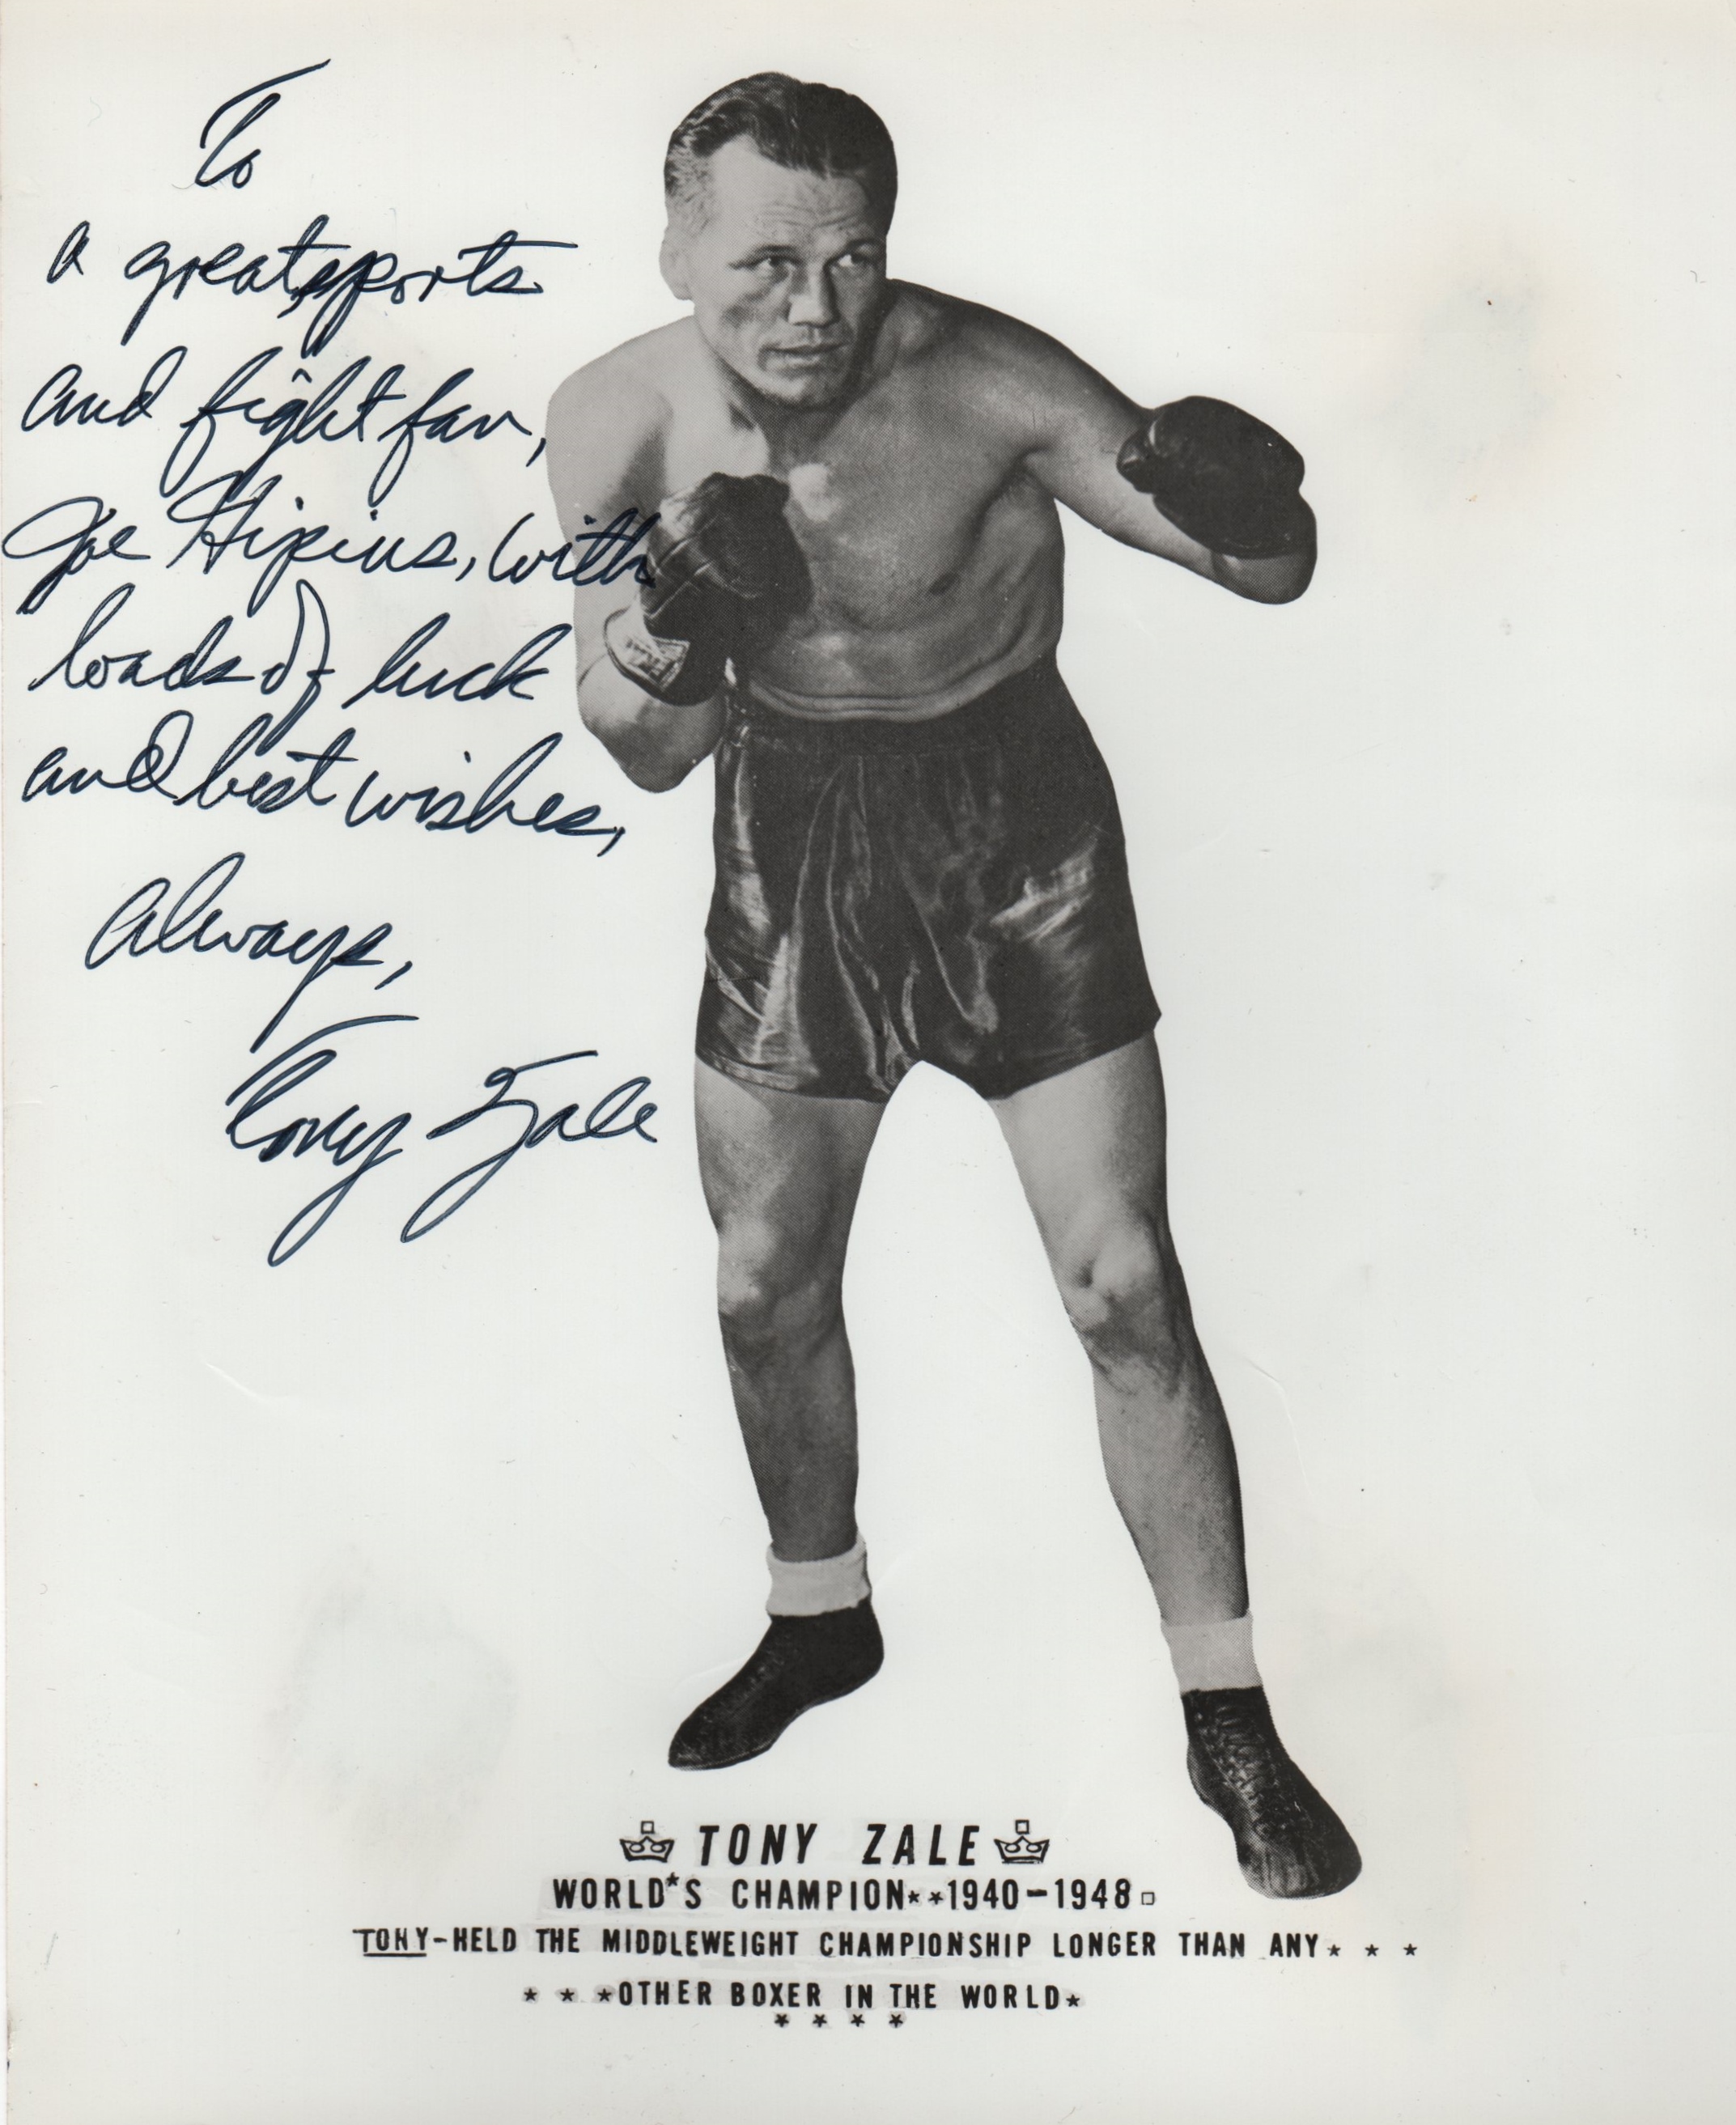 BOXING: Floyd Patterson (1935-2006) American Boxer, World Heavyweight Champion 1956-59, 1960-62. - Image 2 of 3